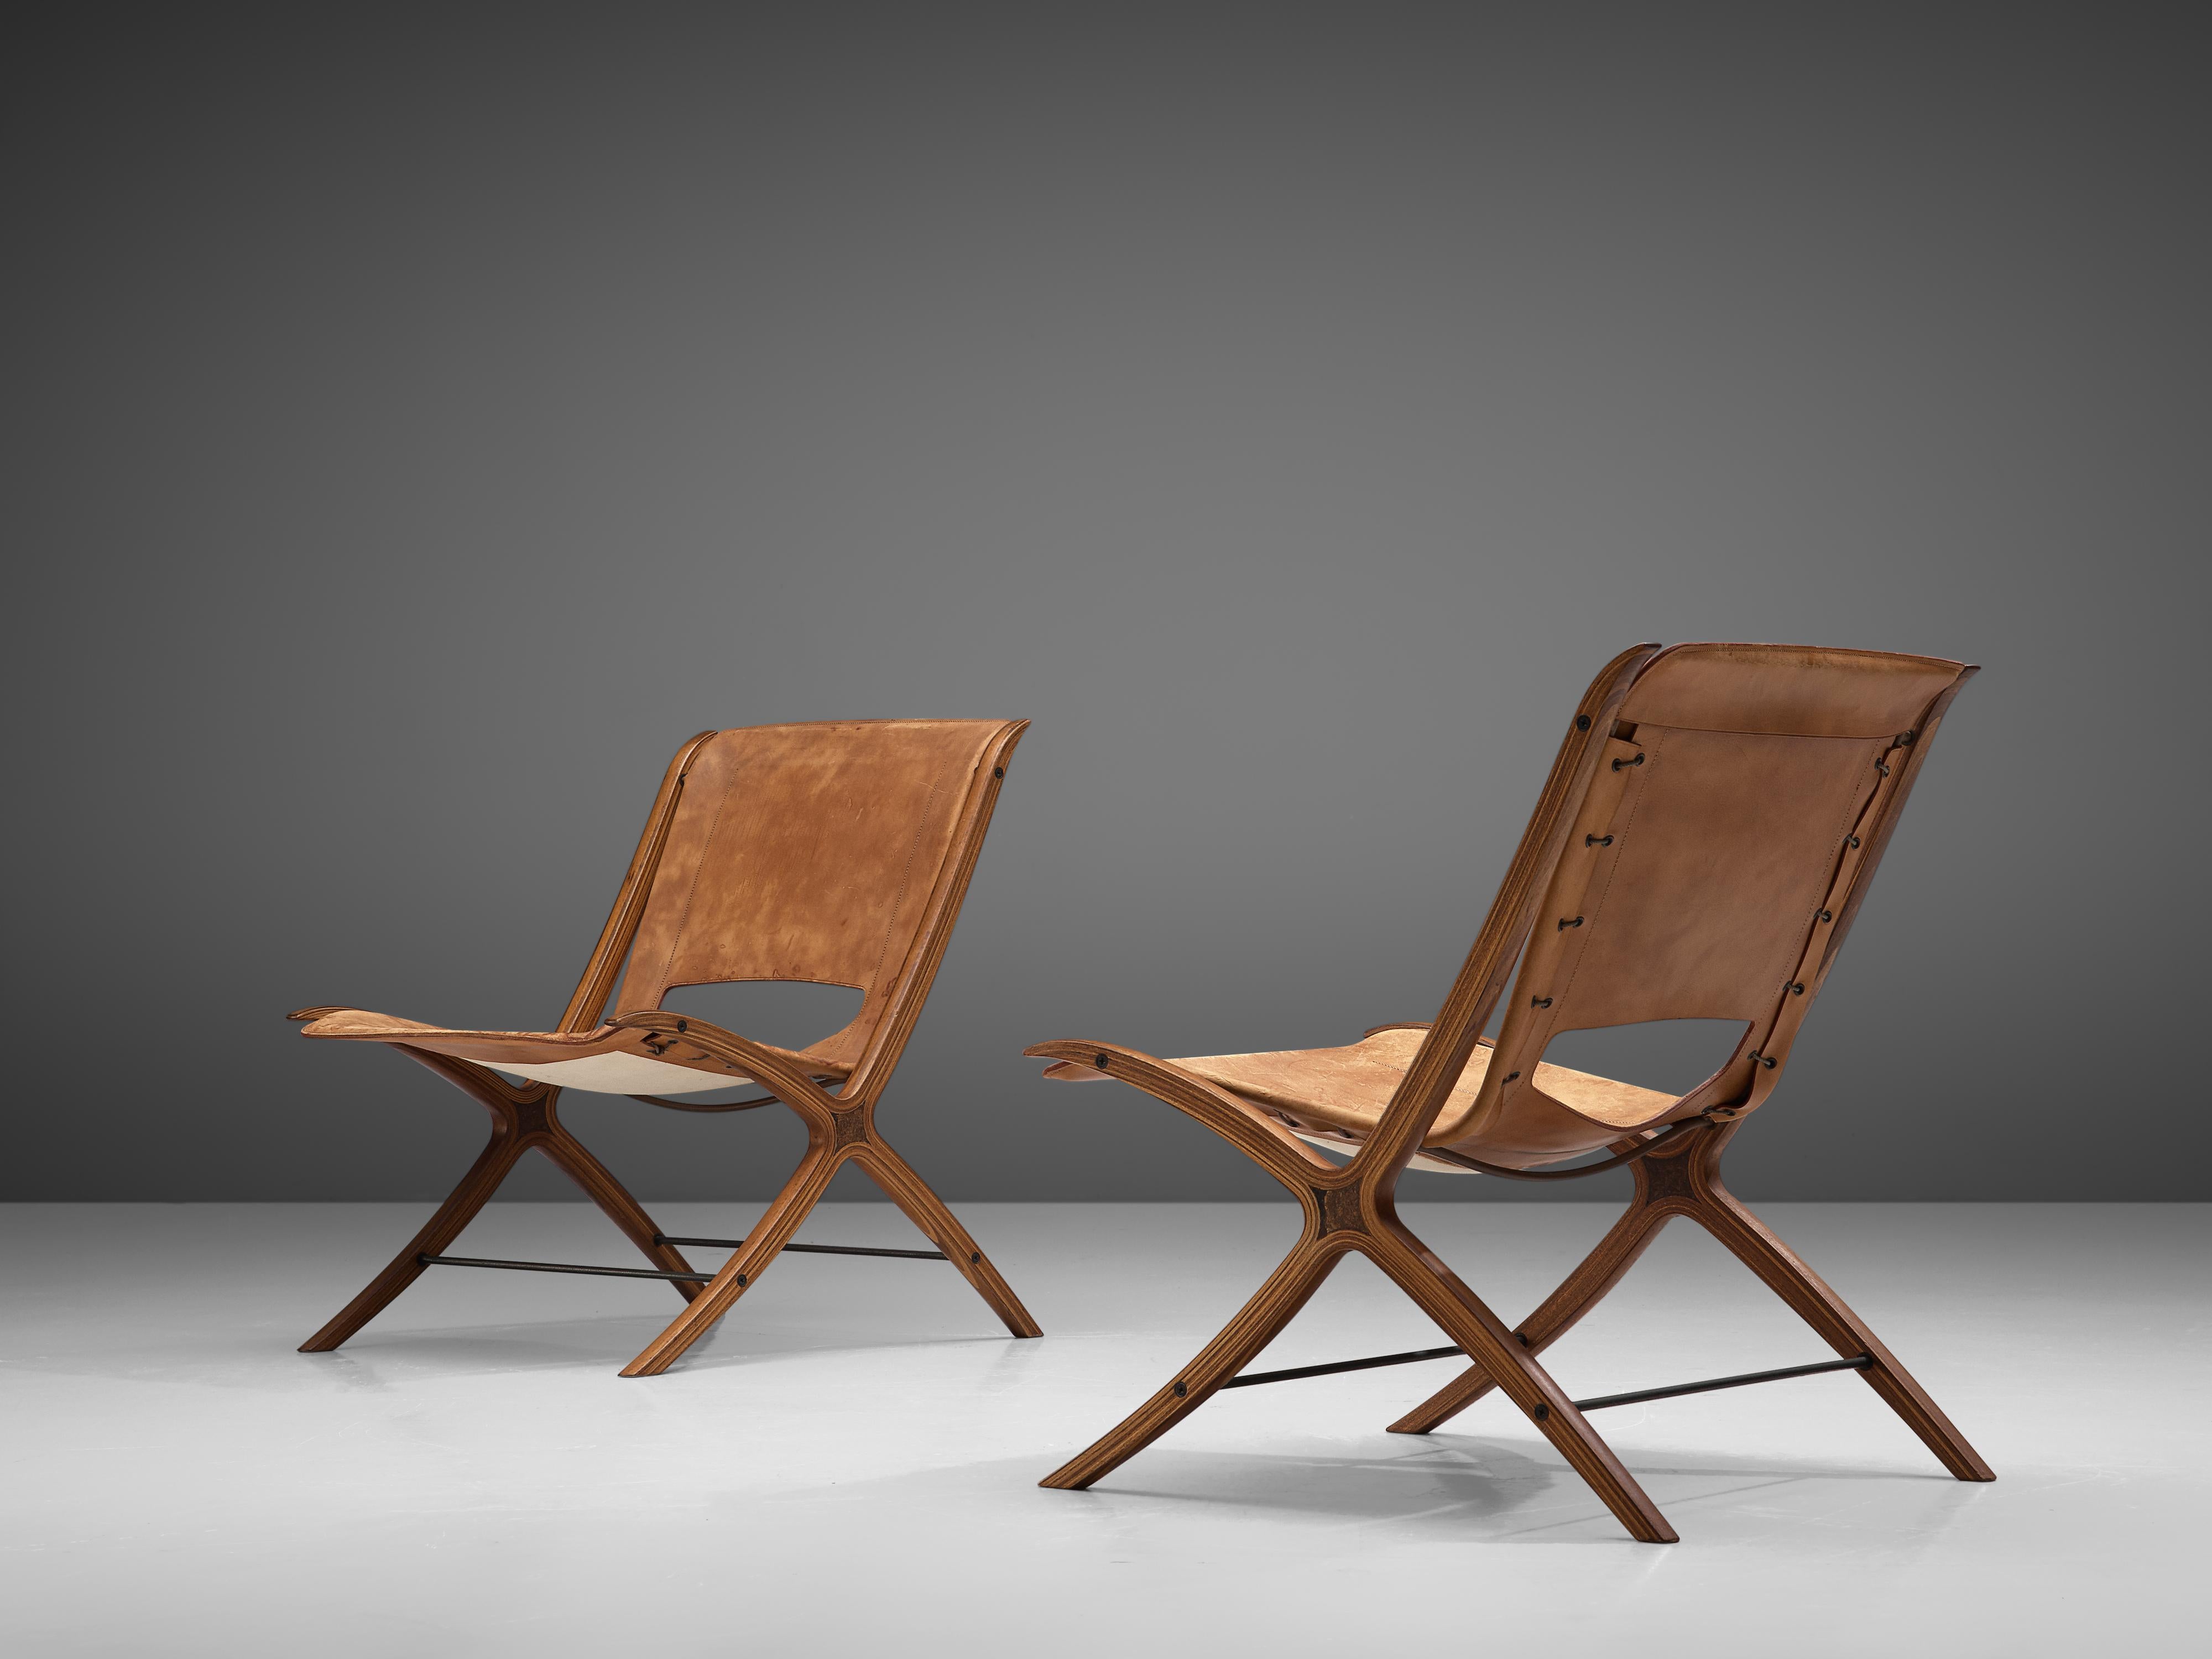 Peter Hvidt & Orla Mølgaard Nielsen for Fritz Hansen, pair of X-chairs 'model 6103', original cognac leather upholstery, mahogany and burlwood, Denmark, 1958.

This pair of chairs designed by Peter Hvidt and Orla Mølgaard Nielsen is for obvious